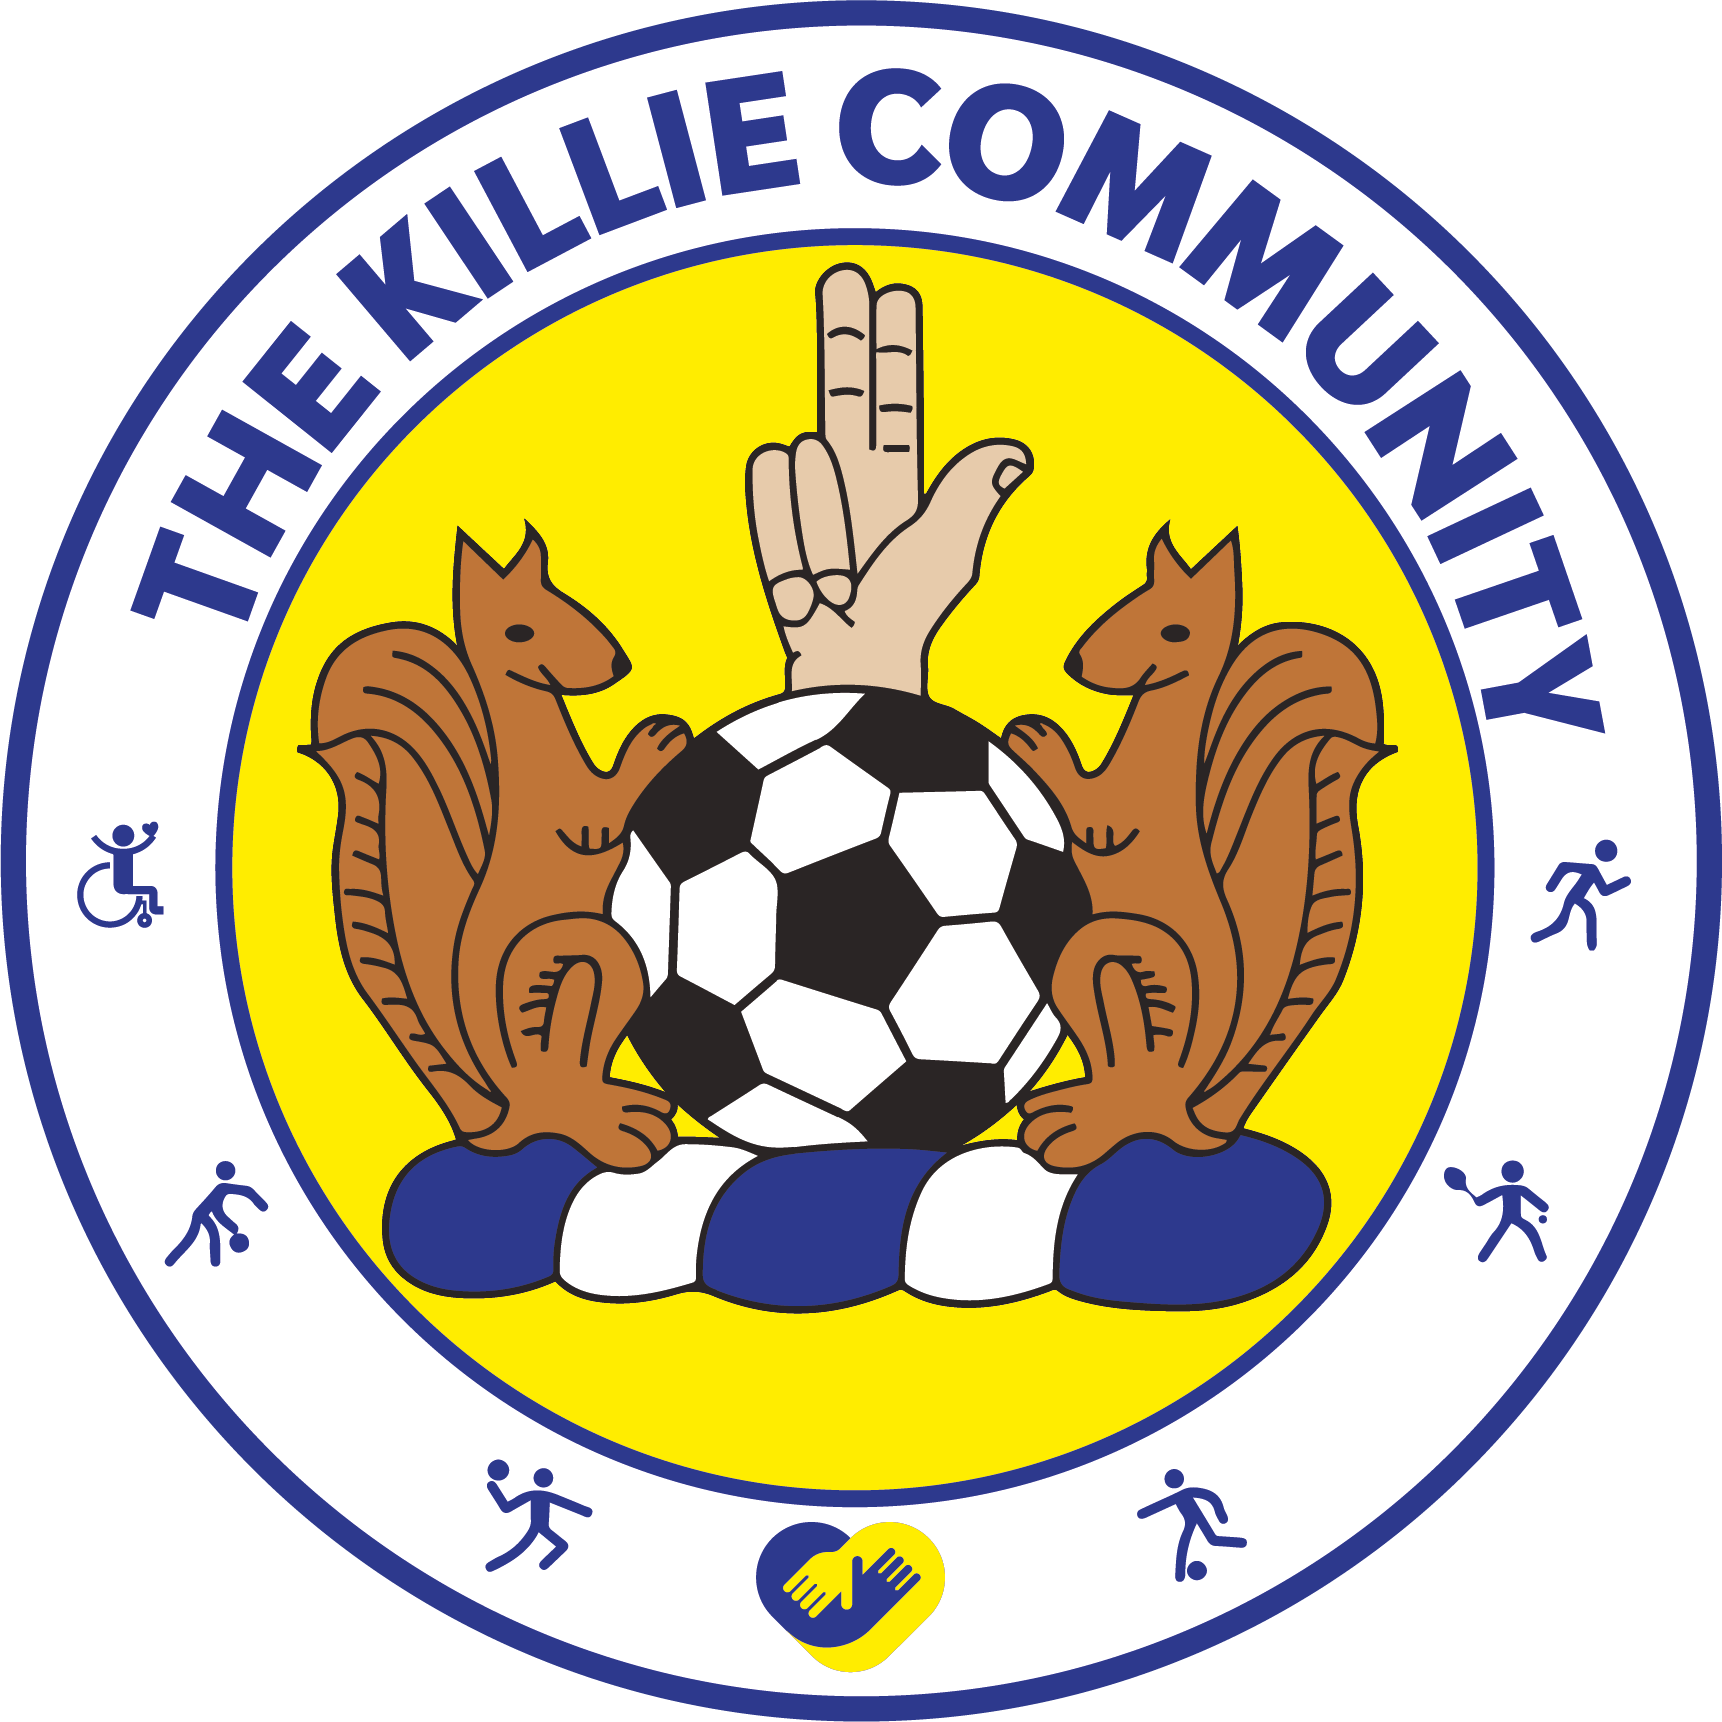 The Killie Community Logo